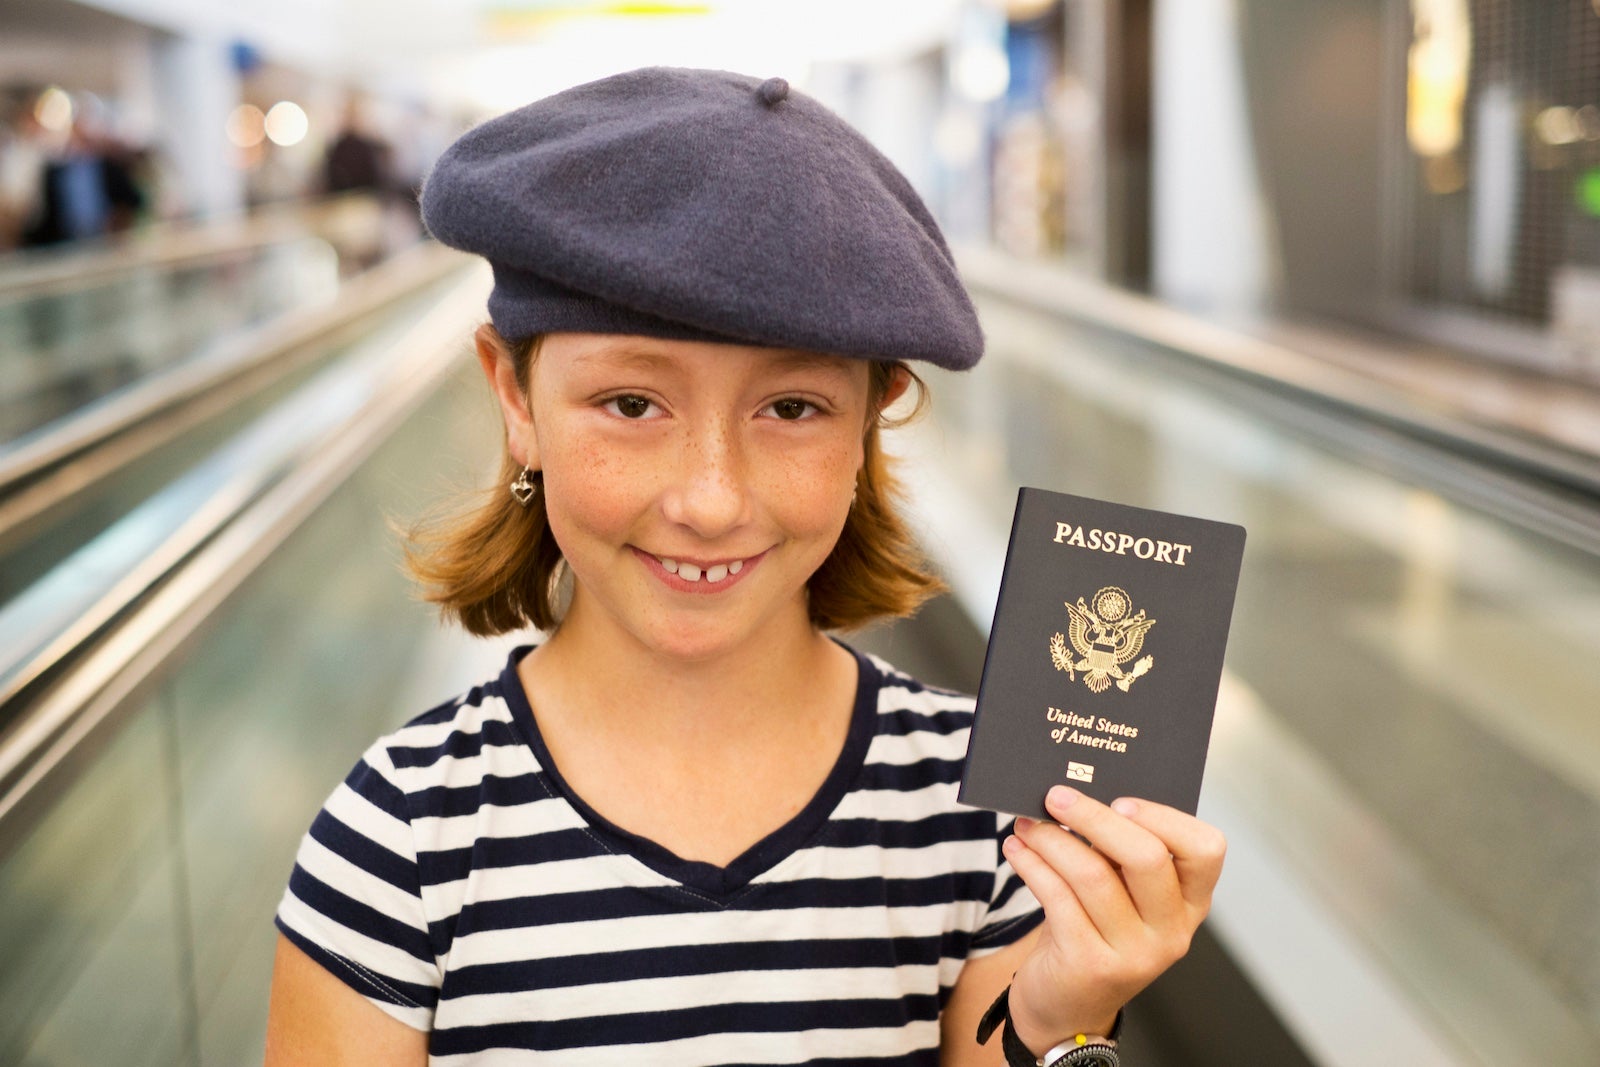 child holding passport